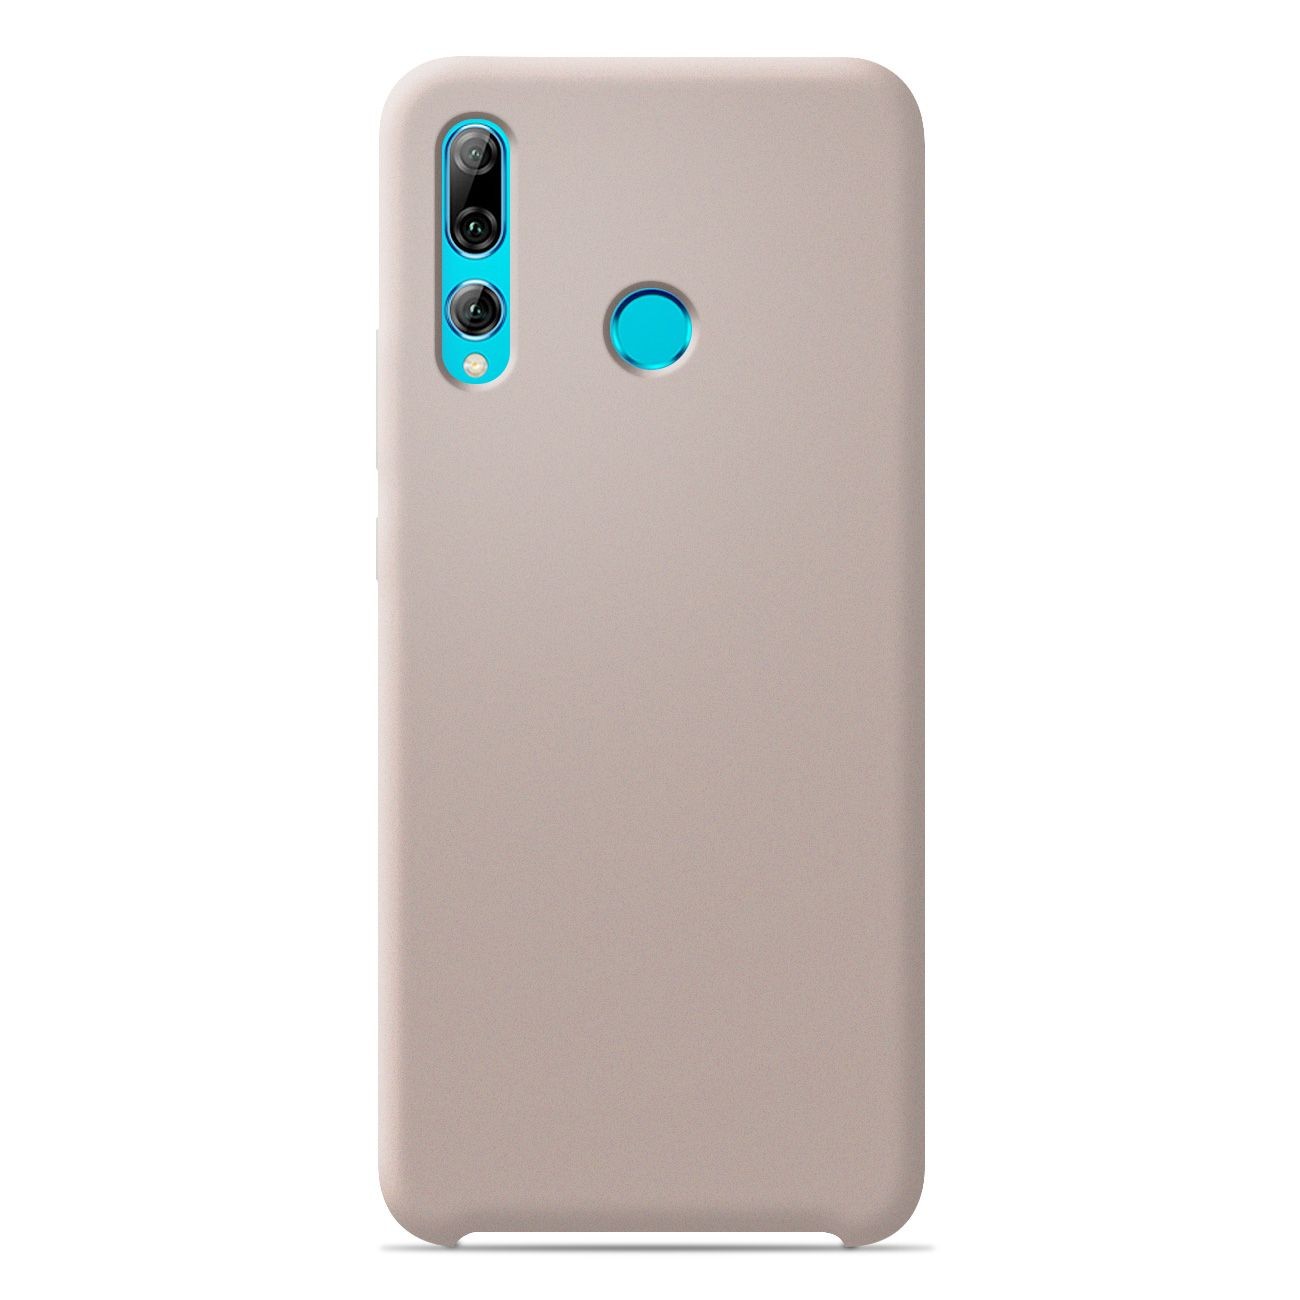 Coque silicone unie Soft Touch Sable rosé compatible Huawei P Smart Plus 2019